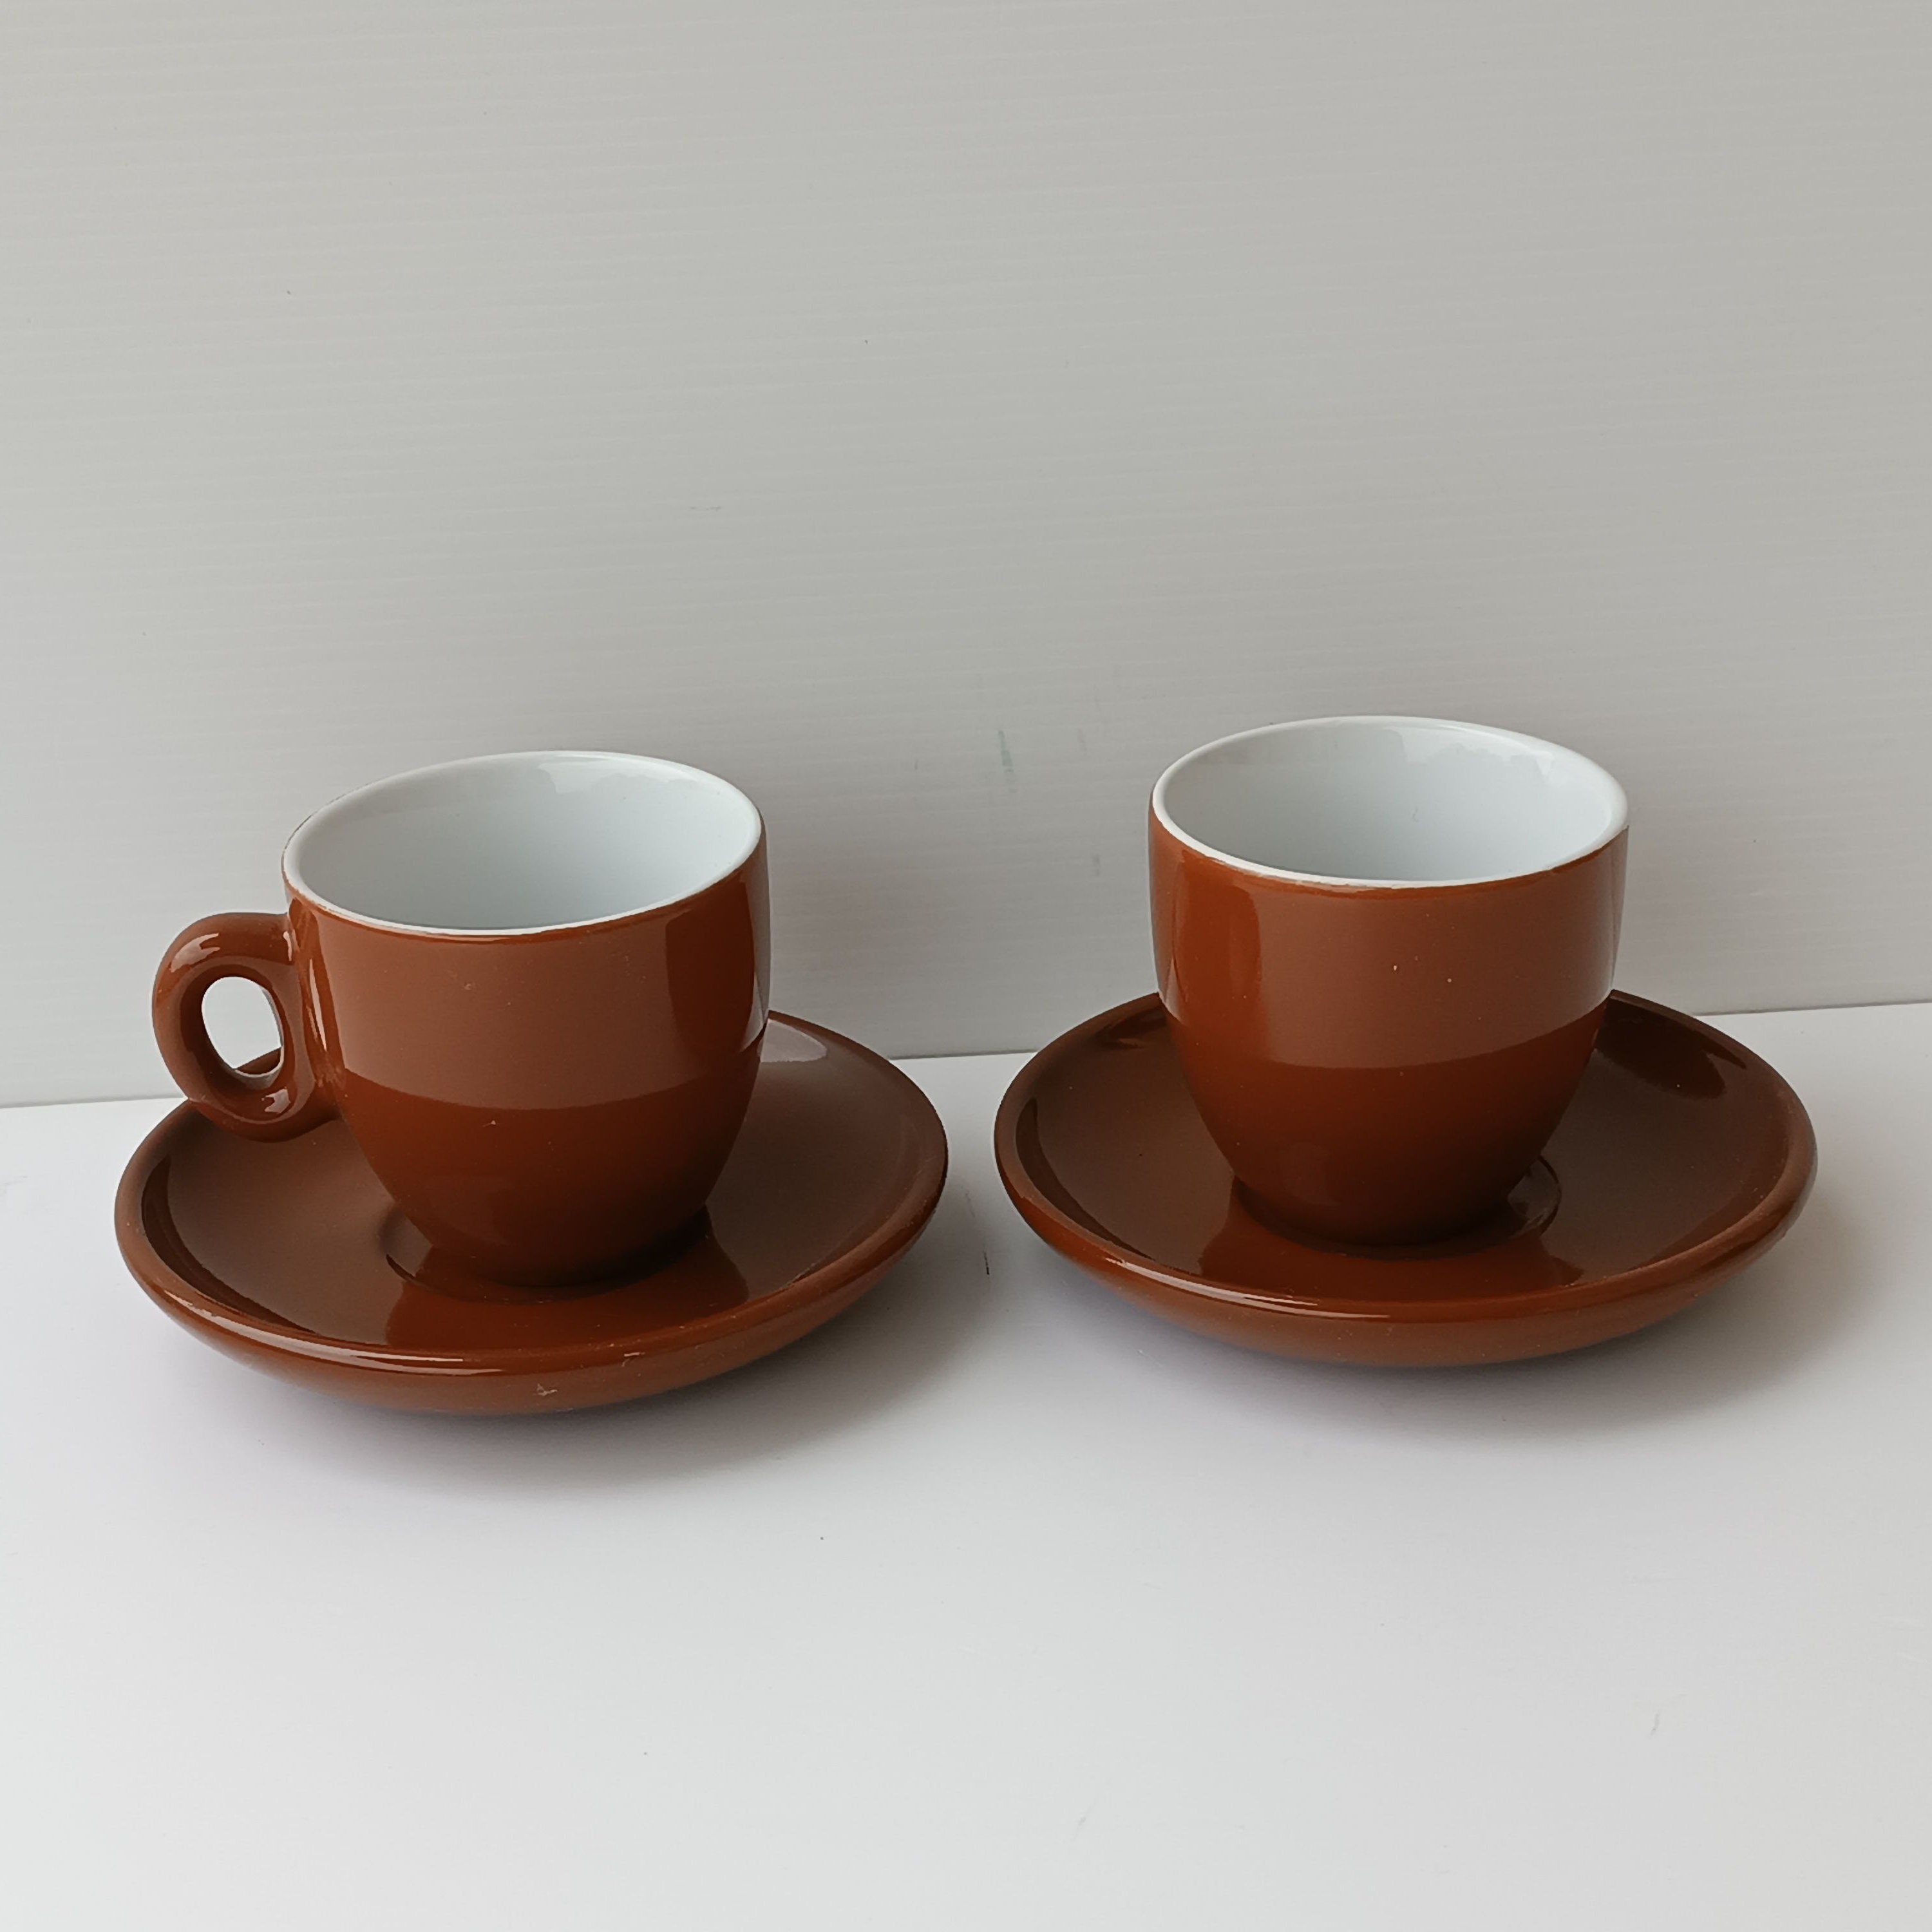 Nice Pair of Original ACF Espresso Cups, Decaffeinato Sereno Bar Cups, Italian  Espresso Cups, Made in Italy 